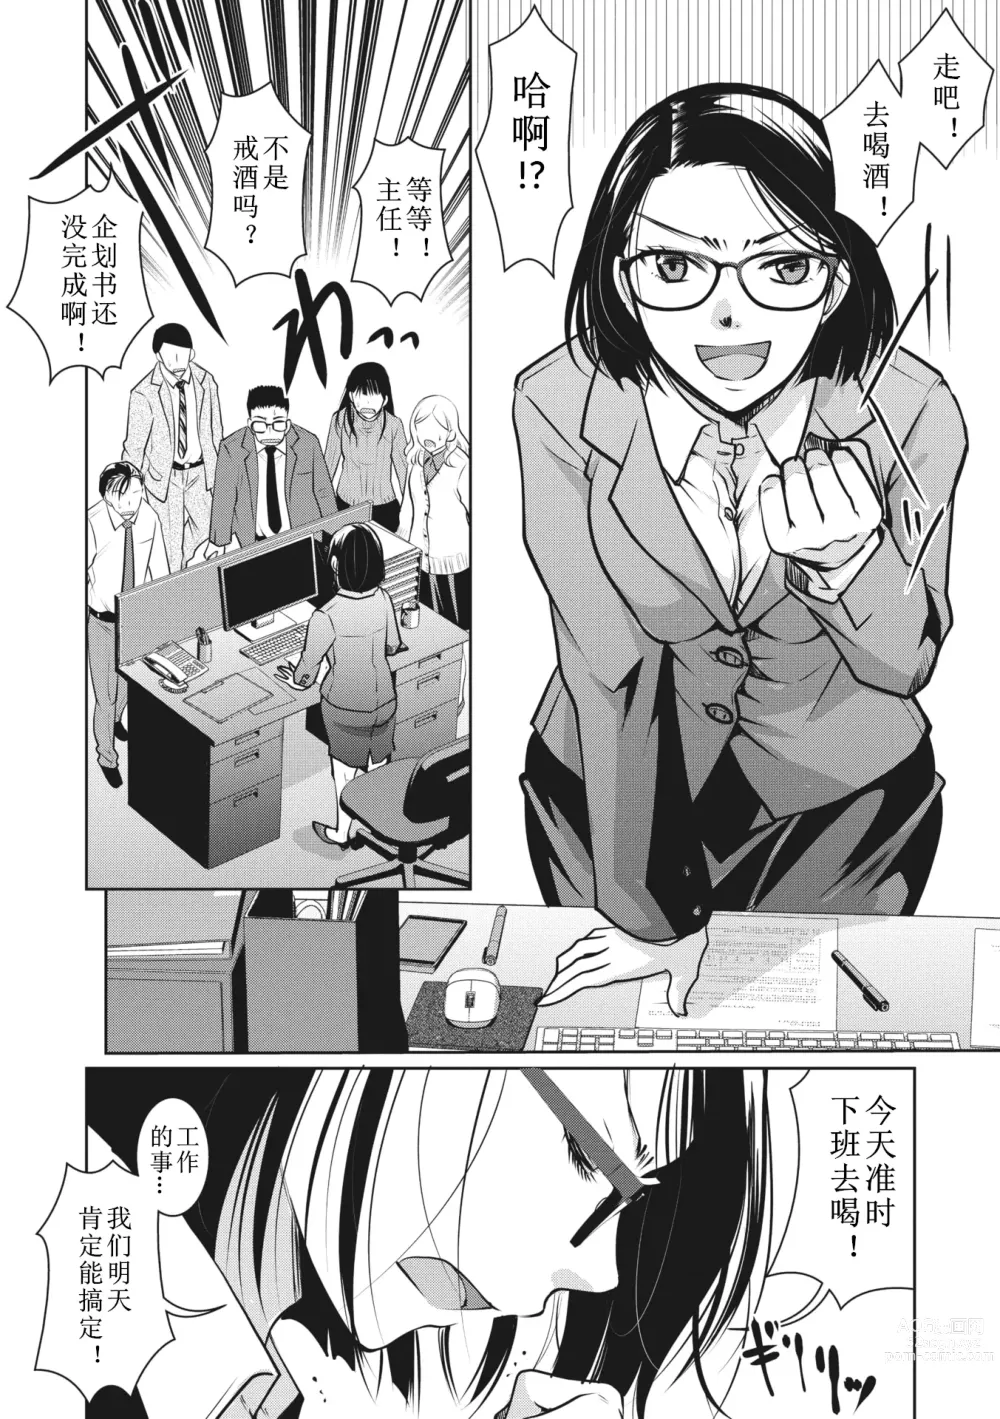 Page 14 of manga 主任今晚也没觉察